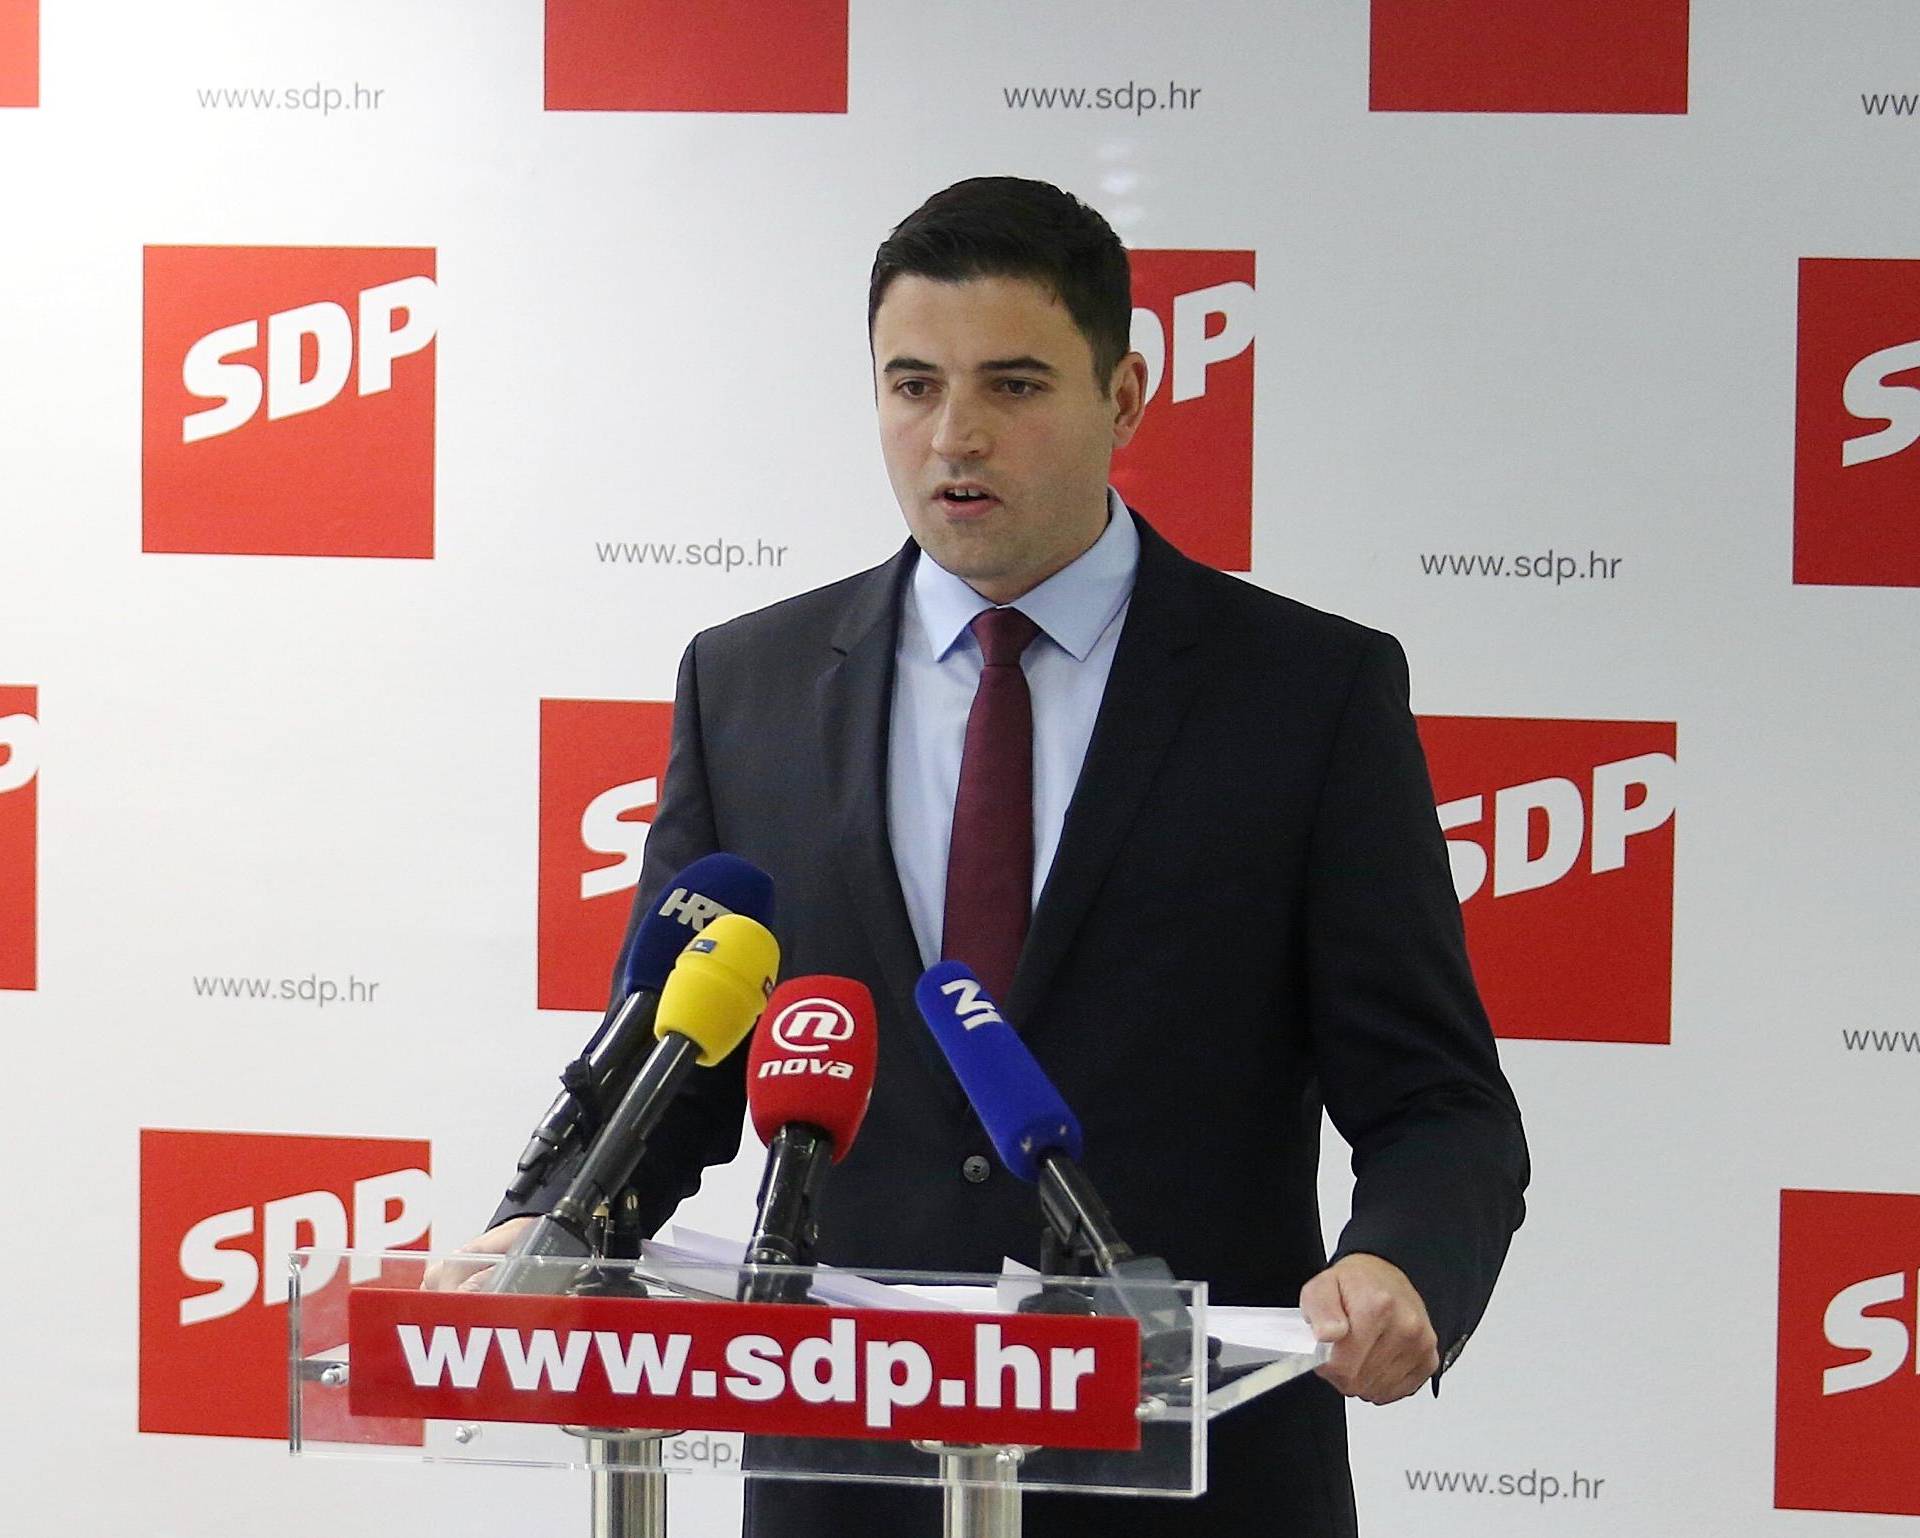 Bero: Reformiramo stranku da bismo reformirali Hrvatsku